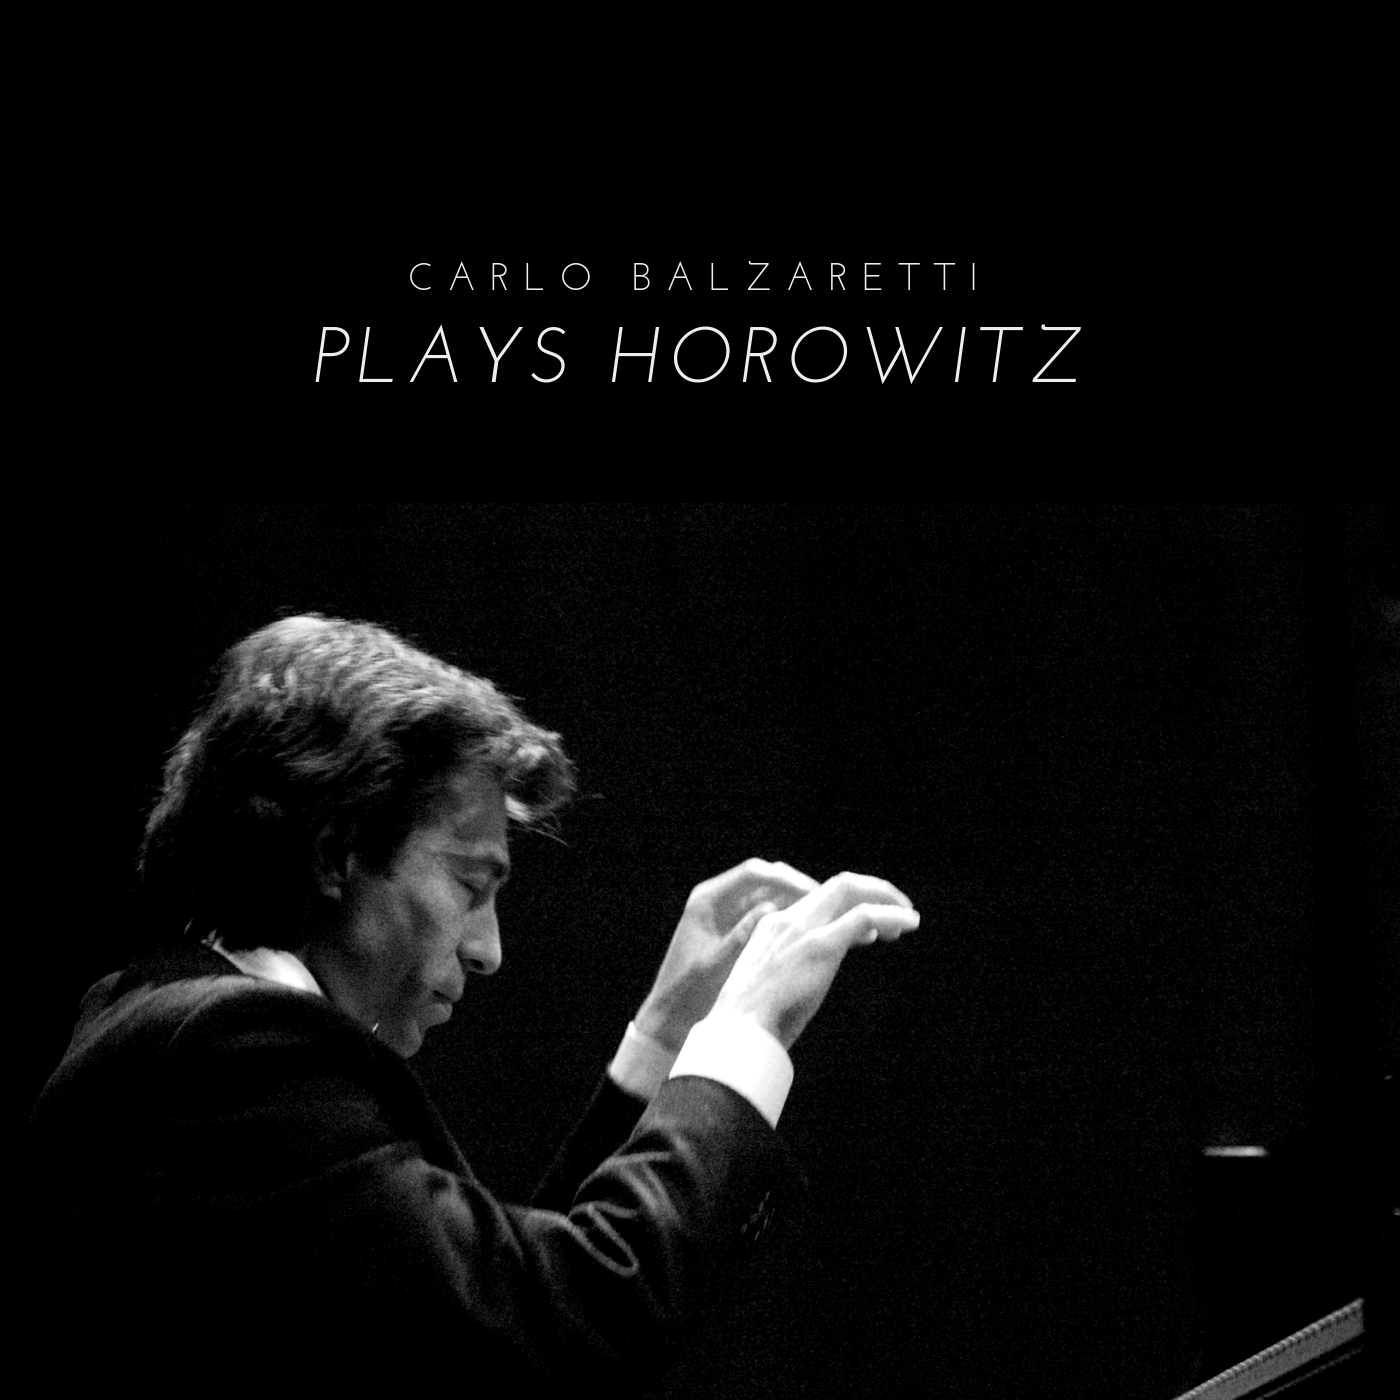 Carlo Balzaretti plays Horowitz